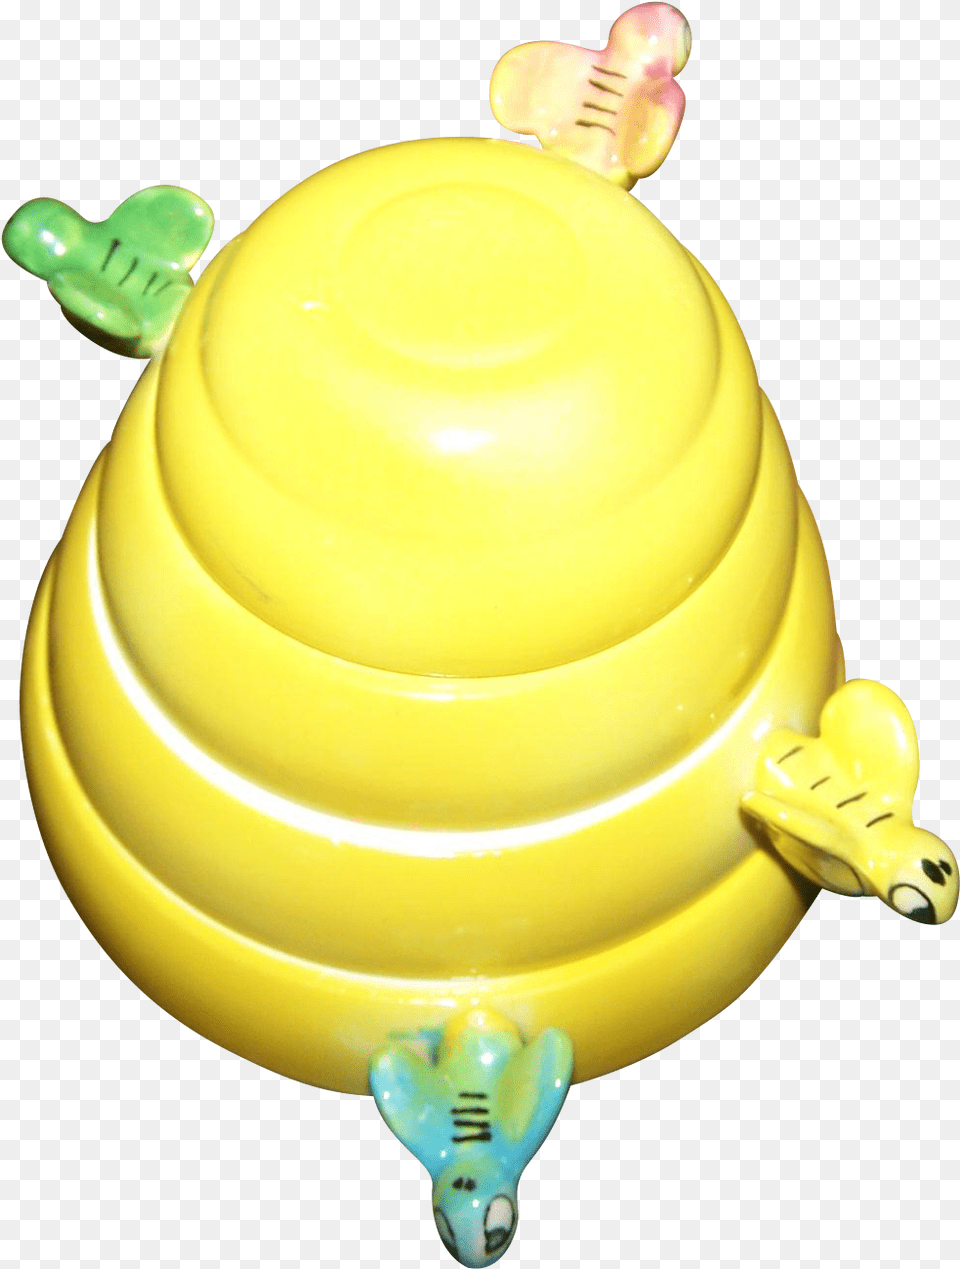 Vintage Bumble Bee Hive Stacking Ceramic Measuring Balloon, Toy Png Image